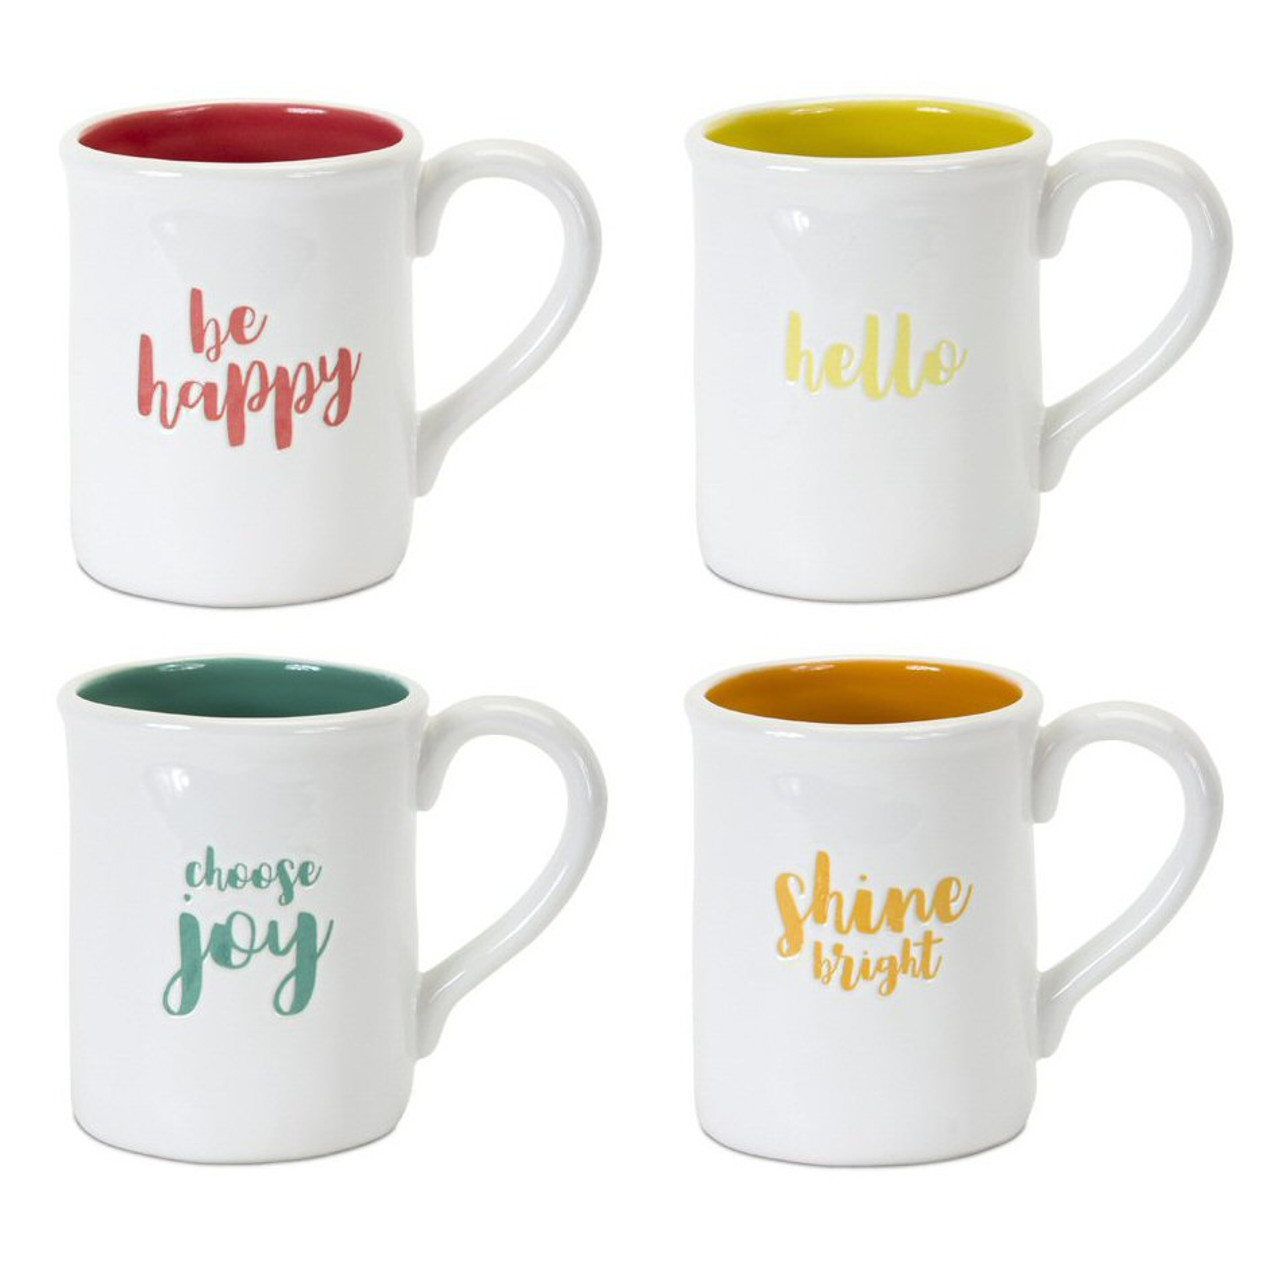 https://cdn11.bigcommerce.com/s-oo0gdojvjo/images/stencil/1280x1280/products/52805/69698/78607-5-be-happy-hello-choose-joy-shine-bright-stoneware-coffee-mugs-set-of-4__48033.1593192106.jpg?c=2